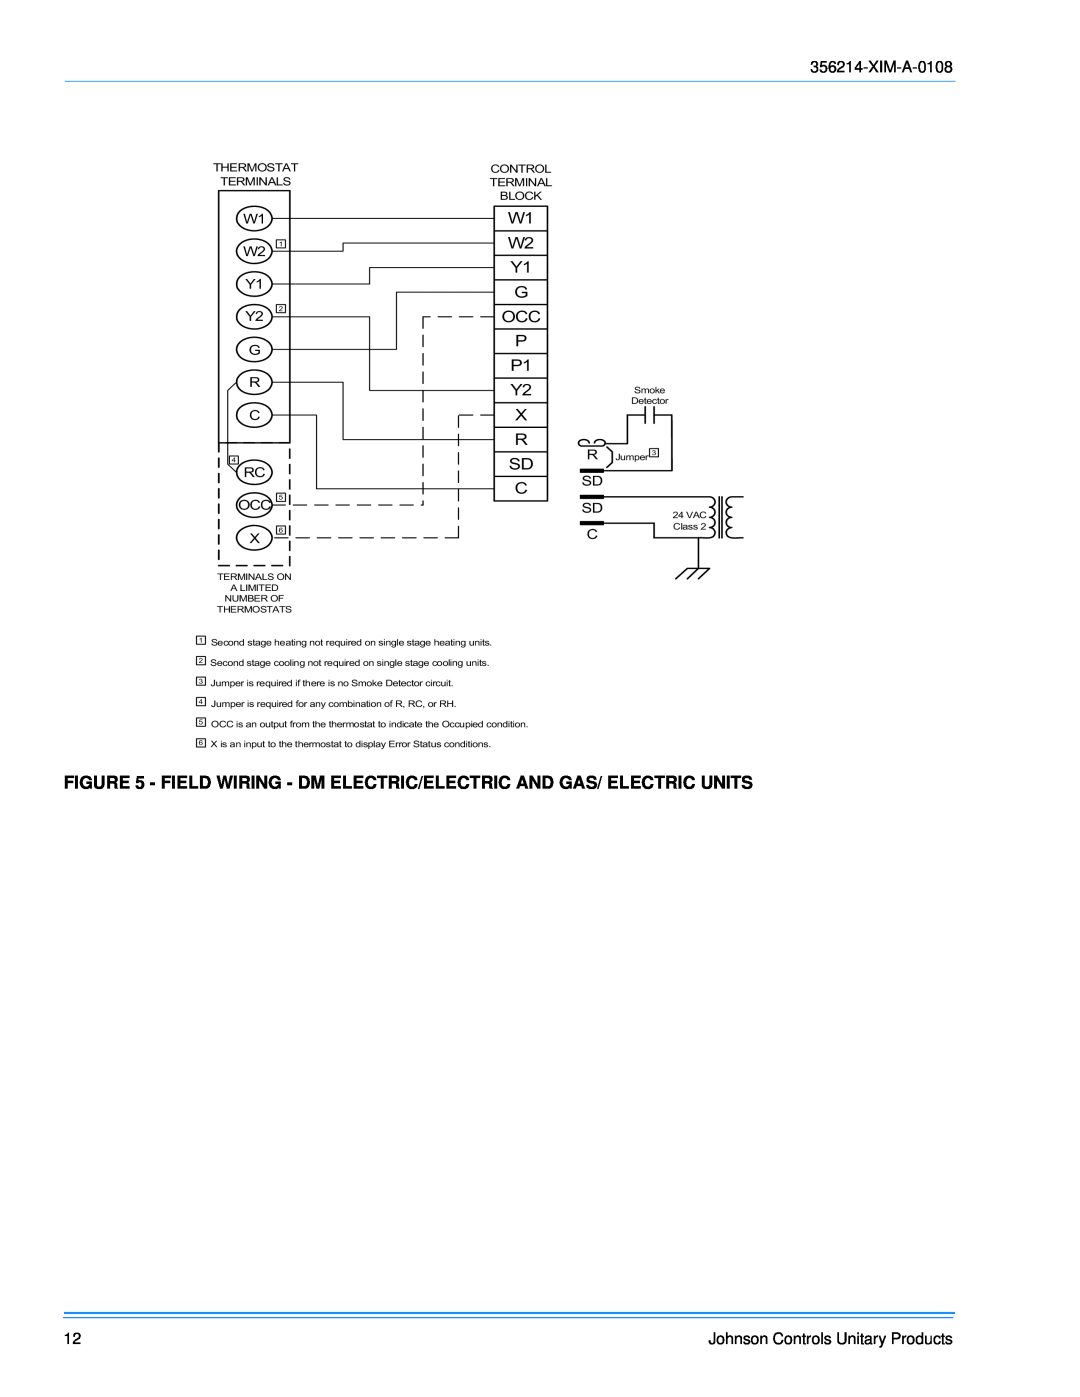 Sunlife Enterprises DM300, DM240, DM180 installation manual XIM-A-0108 